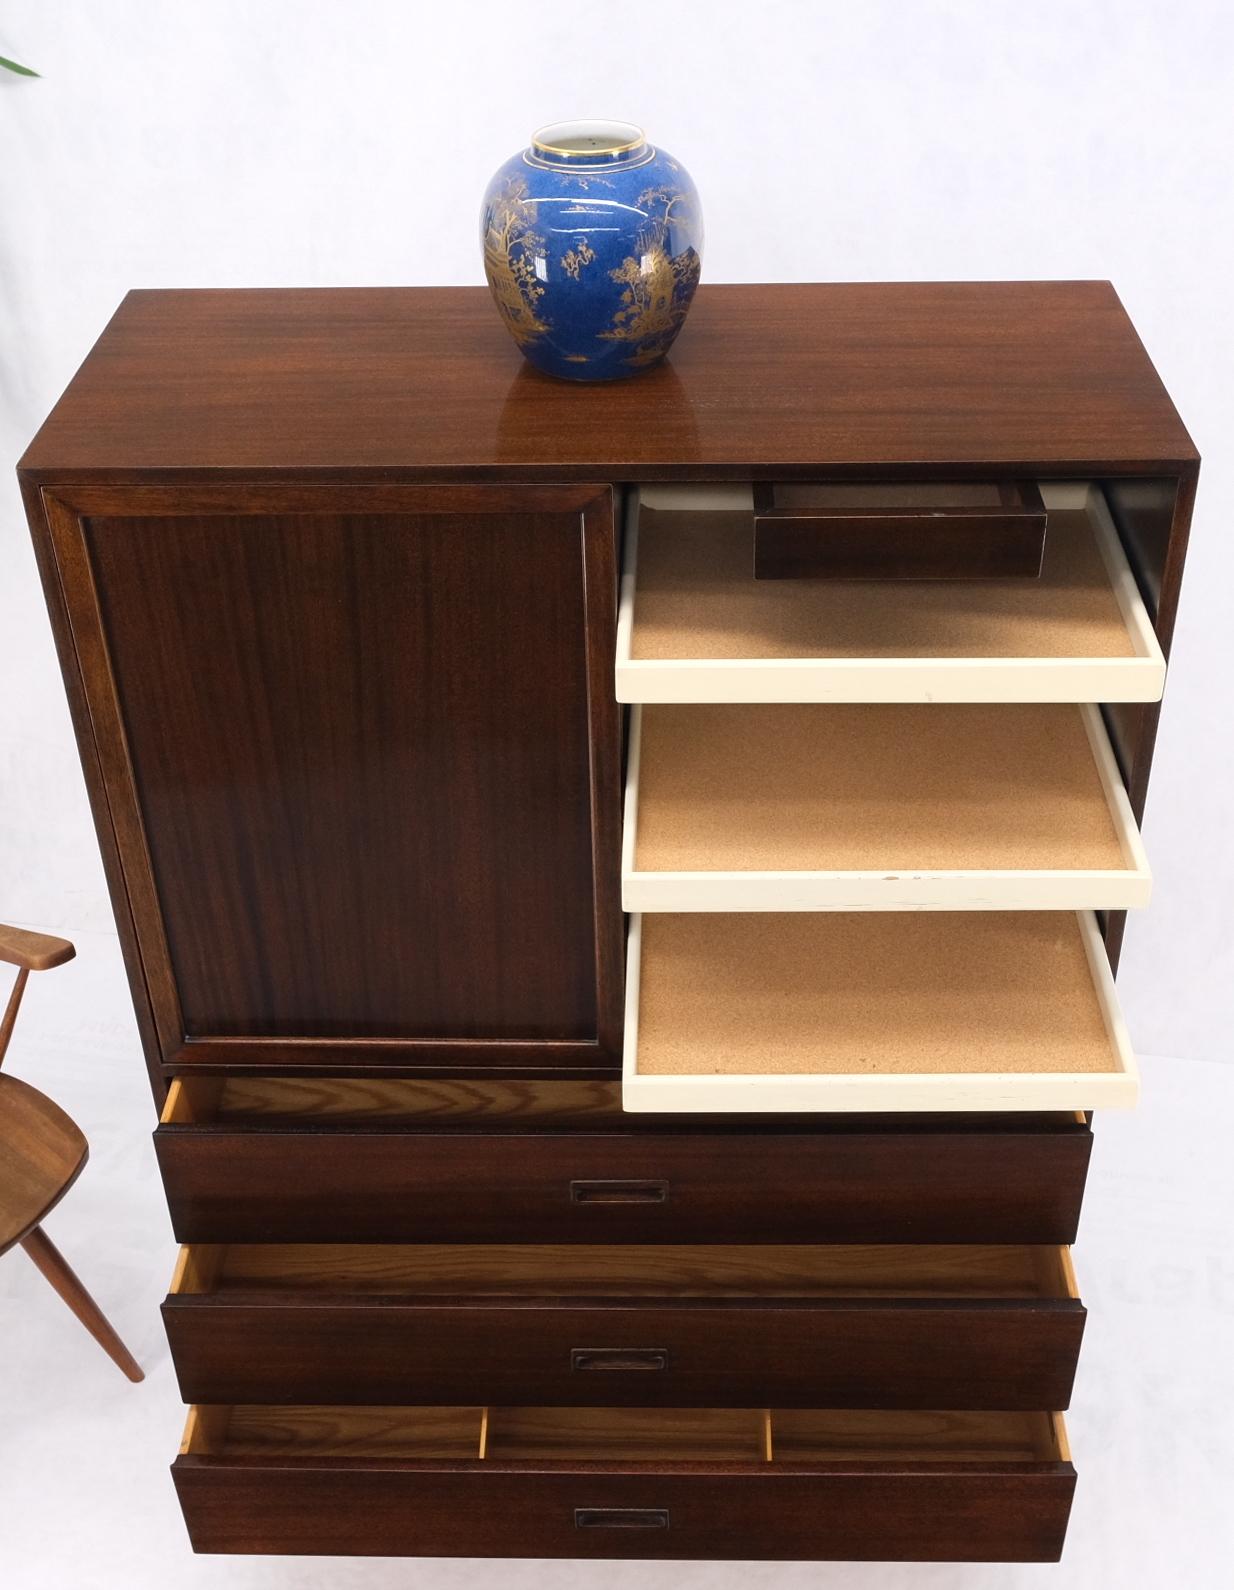 Harvey Probber Espresso mahogany sliding doors 11 drawers gentlemen's chest highboy dresser mint
Cork lined drawers.